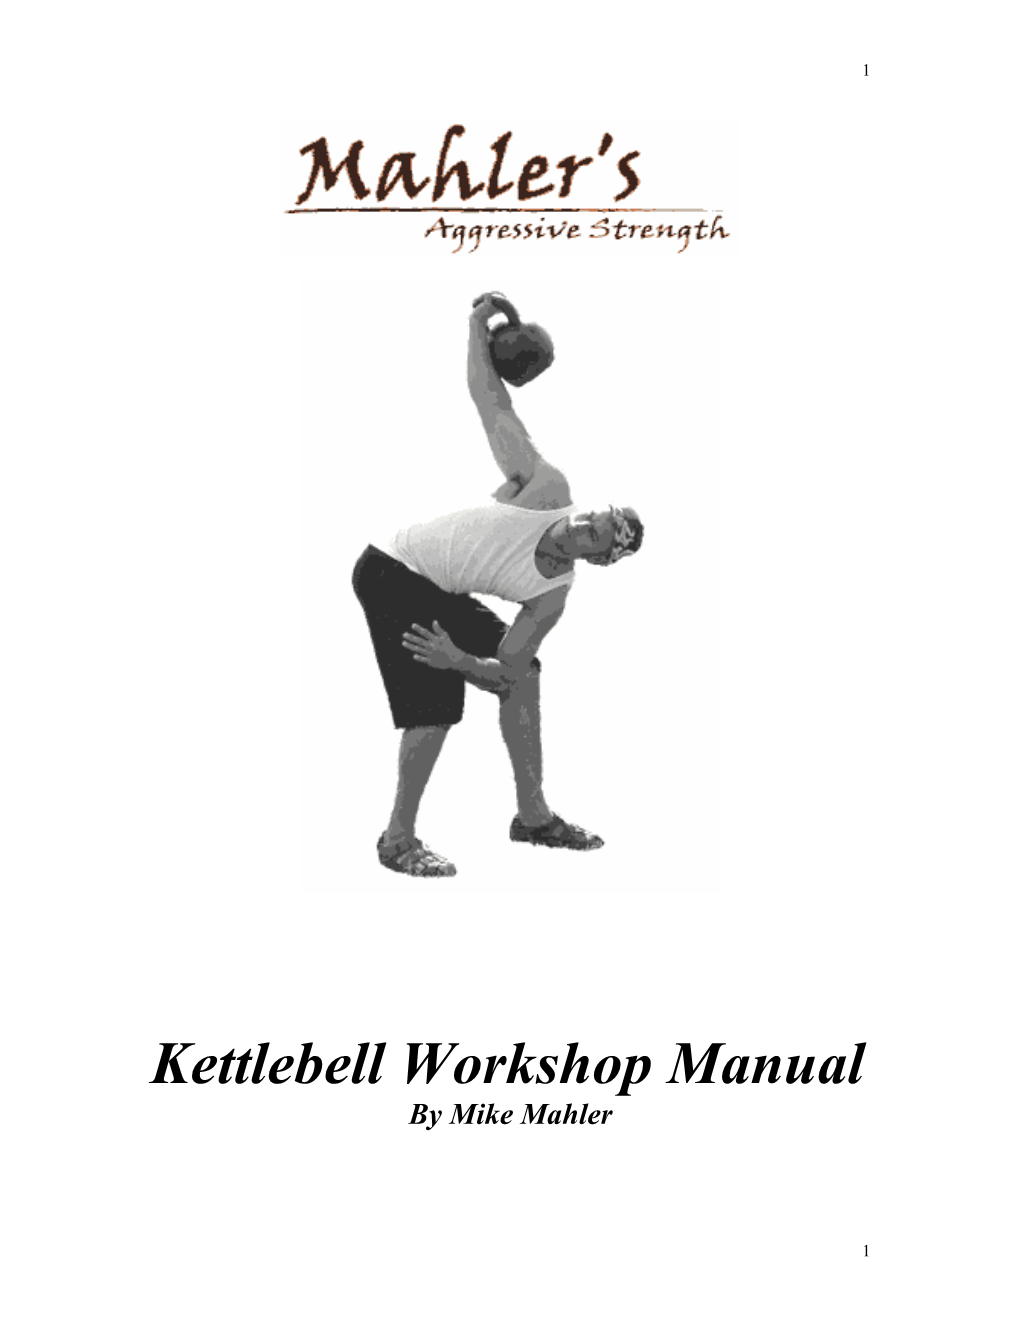 Kettlebell Workshop Manual by Mike Mahler